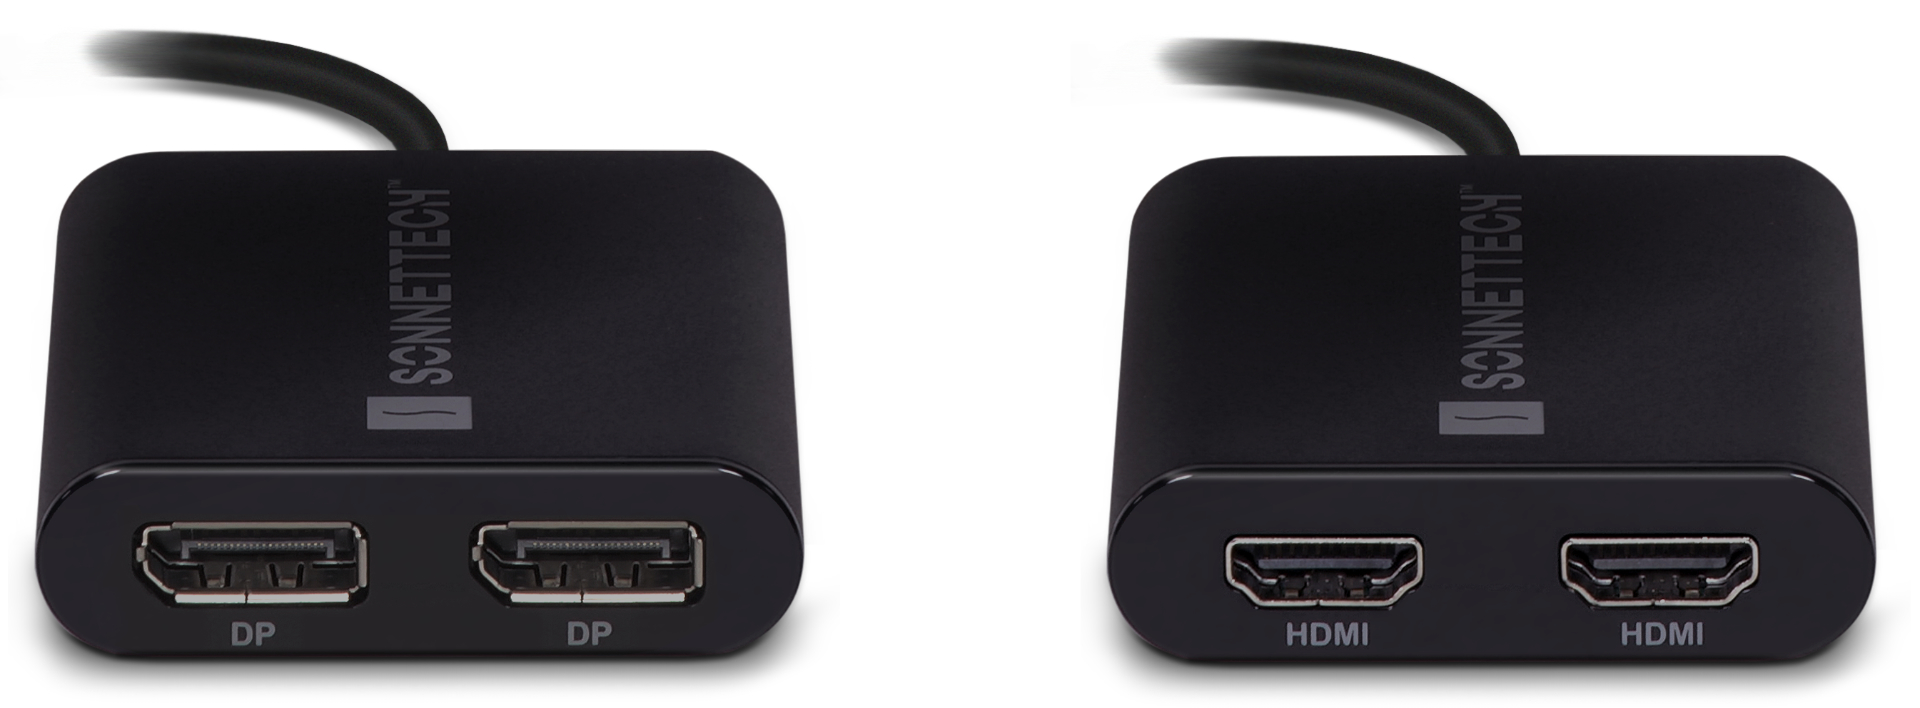 Sonnet DisplayLink Adapters – Two External 4K 60Hz Displays on